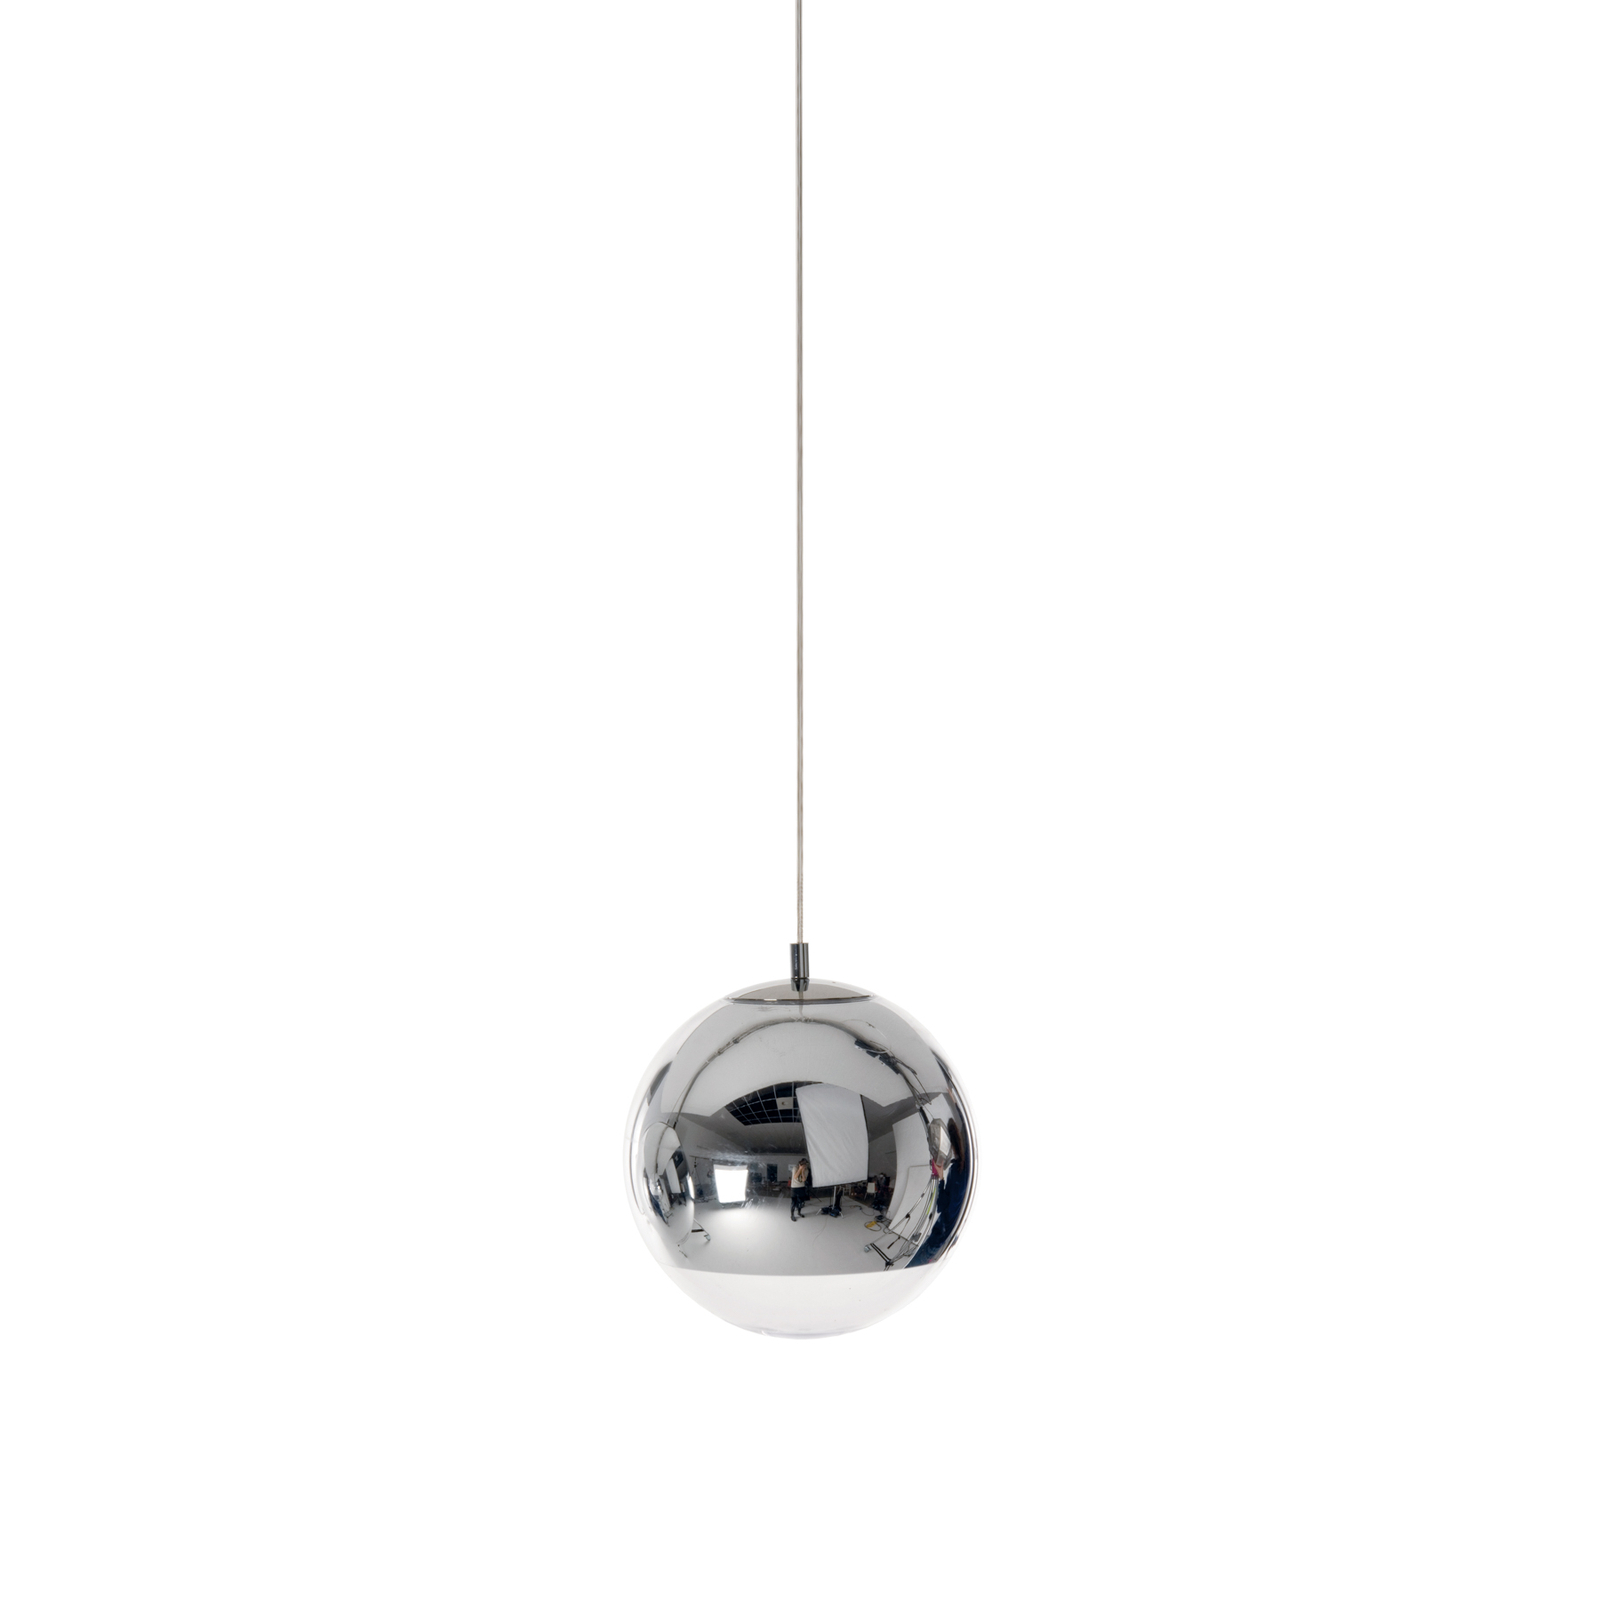 Tom Dixon Mirror Ball LED-Hängelampe Ø 25 cm chrom